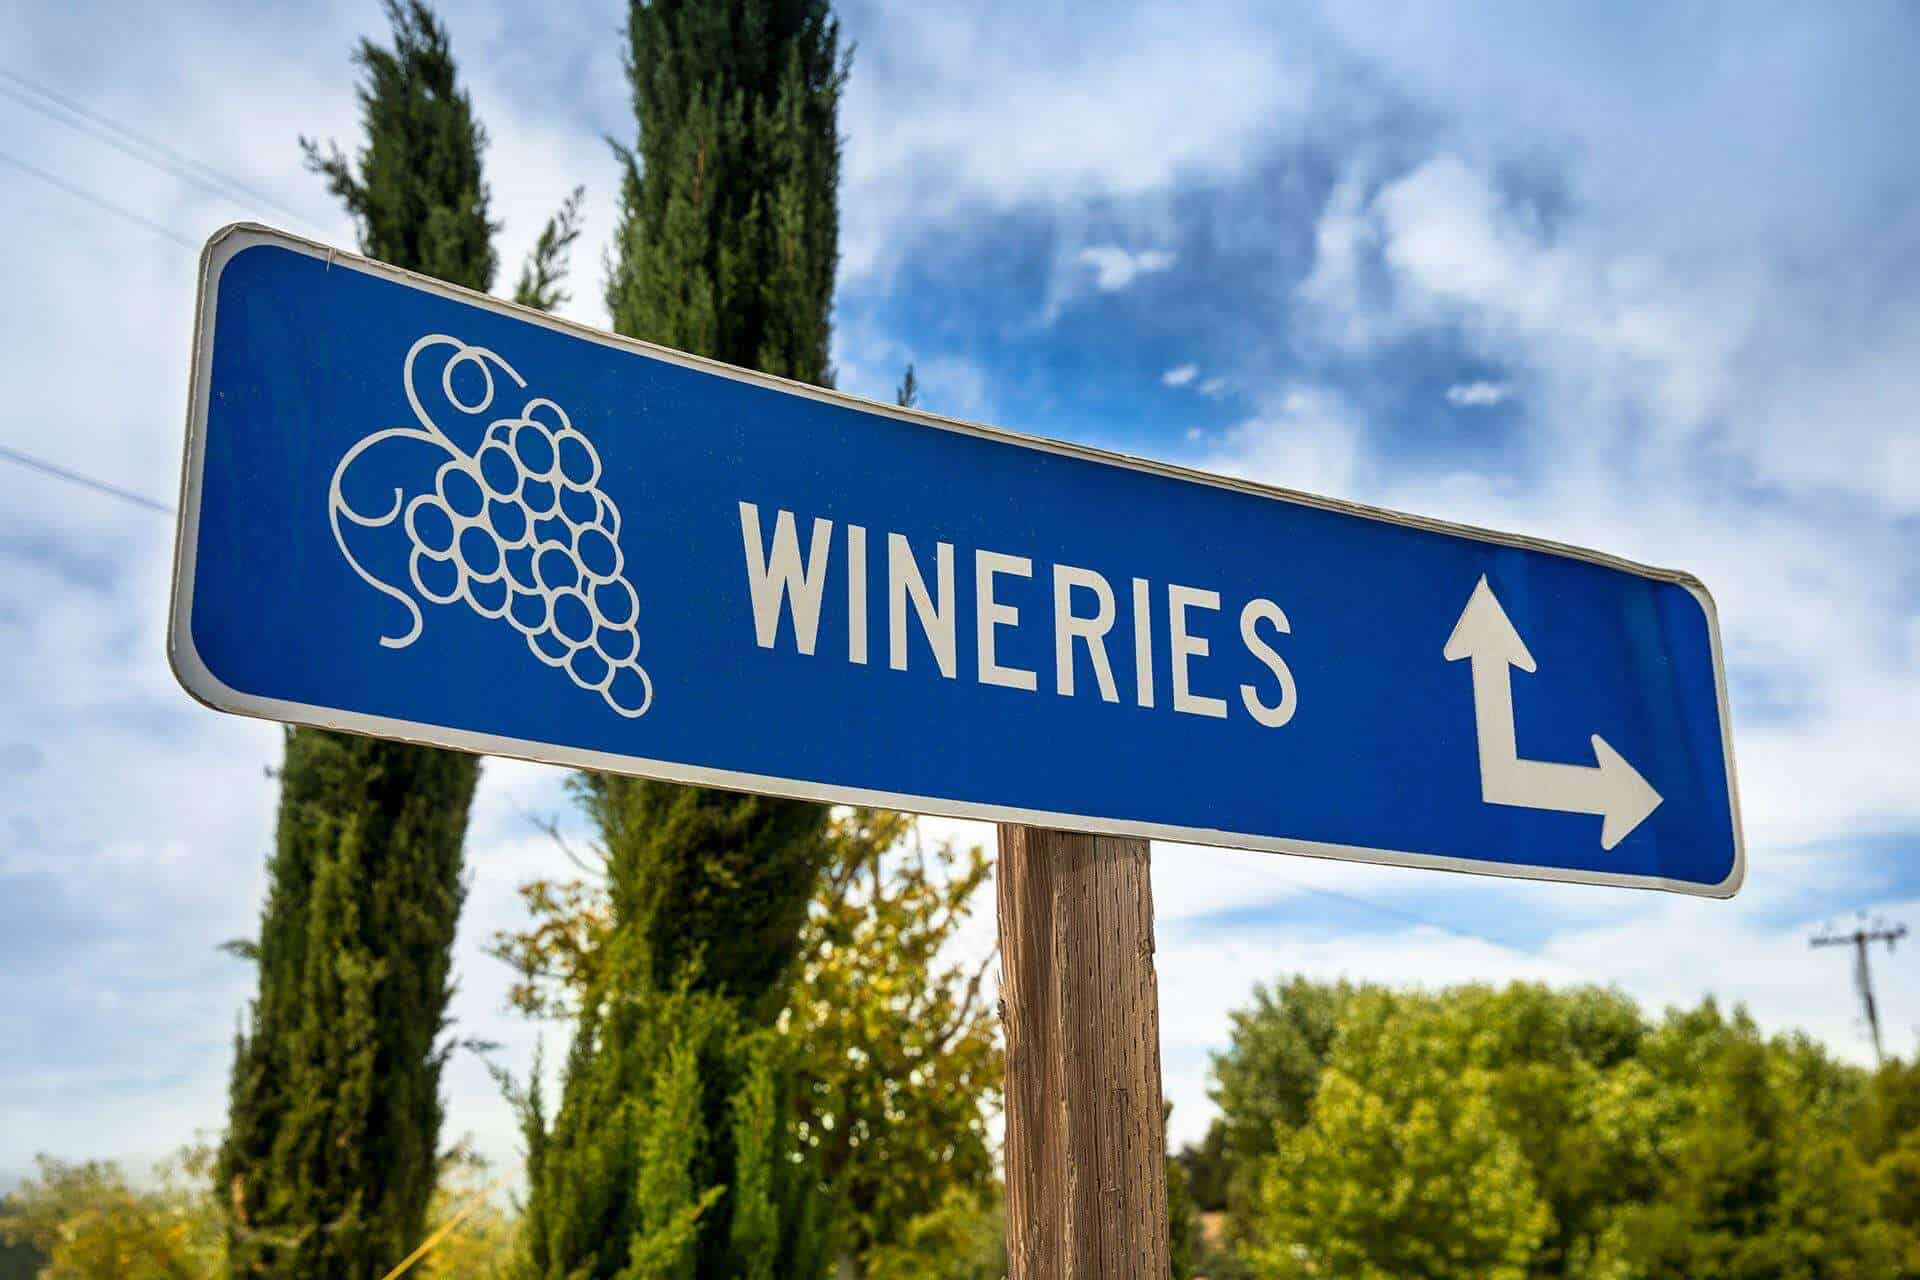 Wineries destination sign